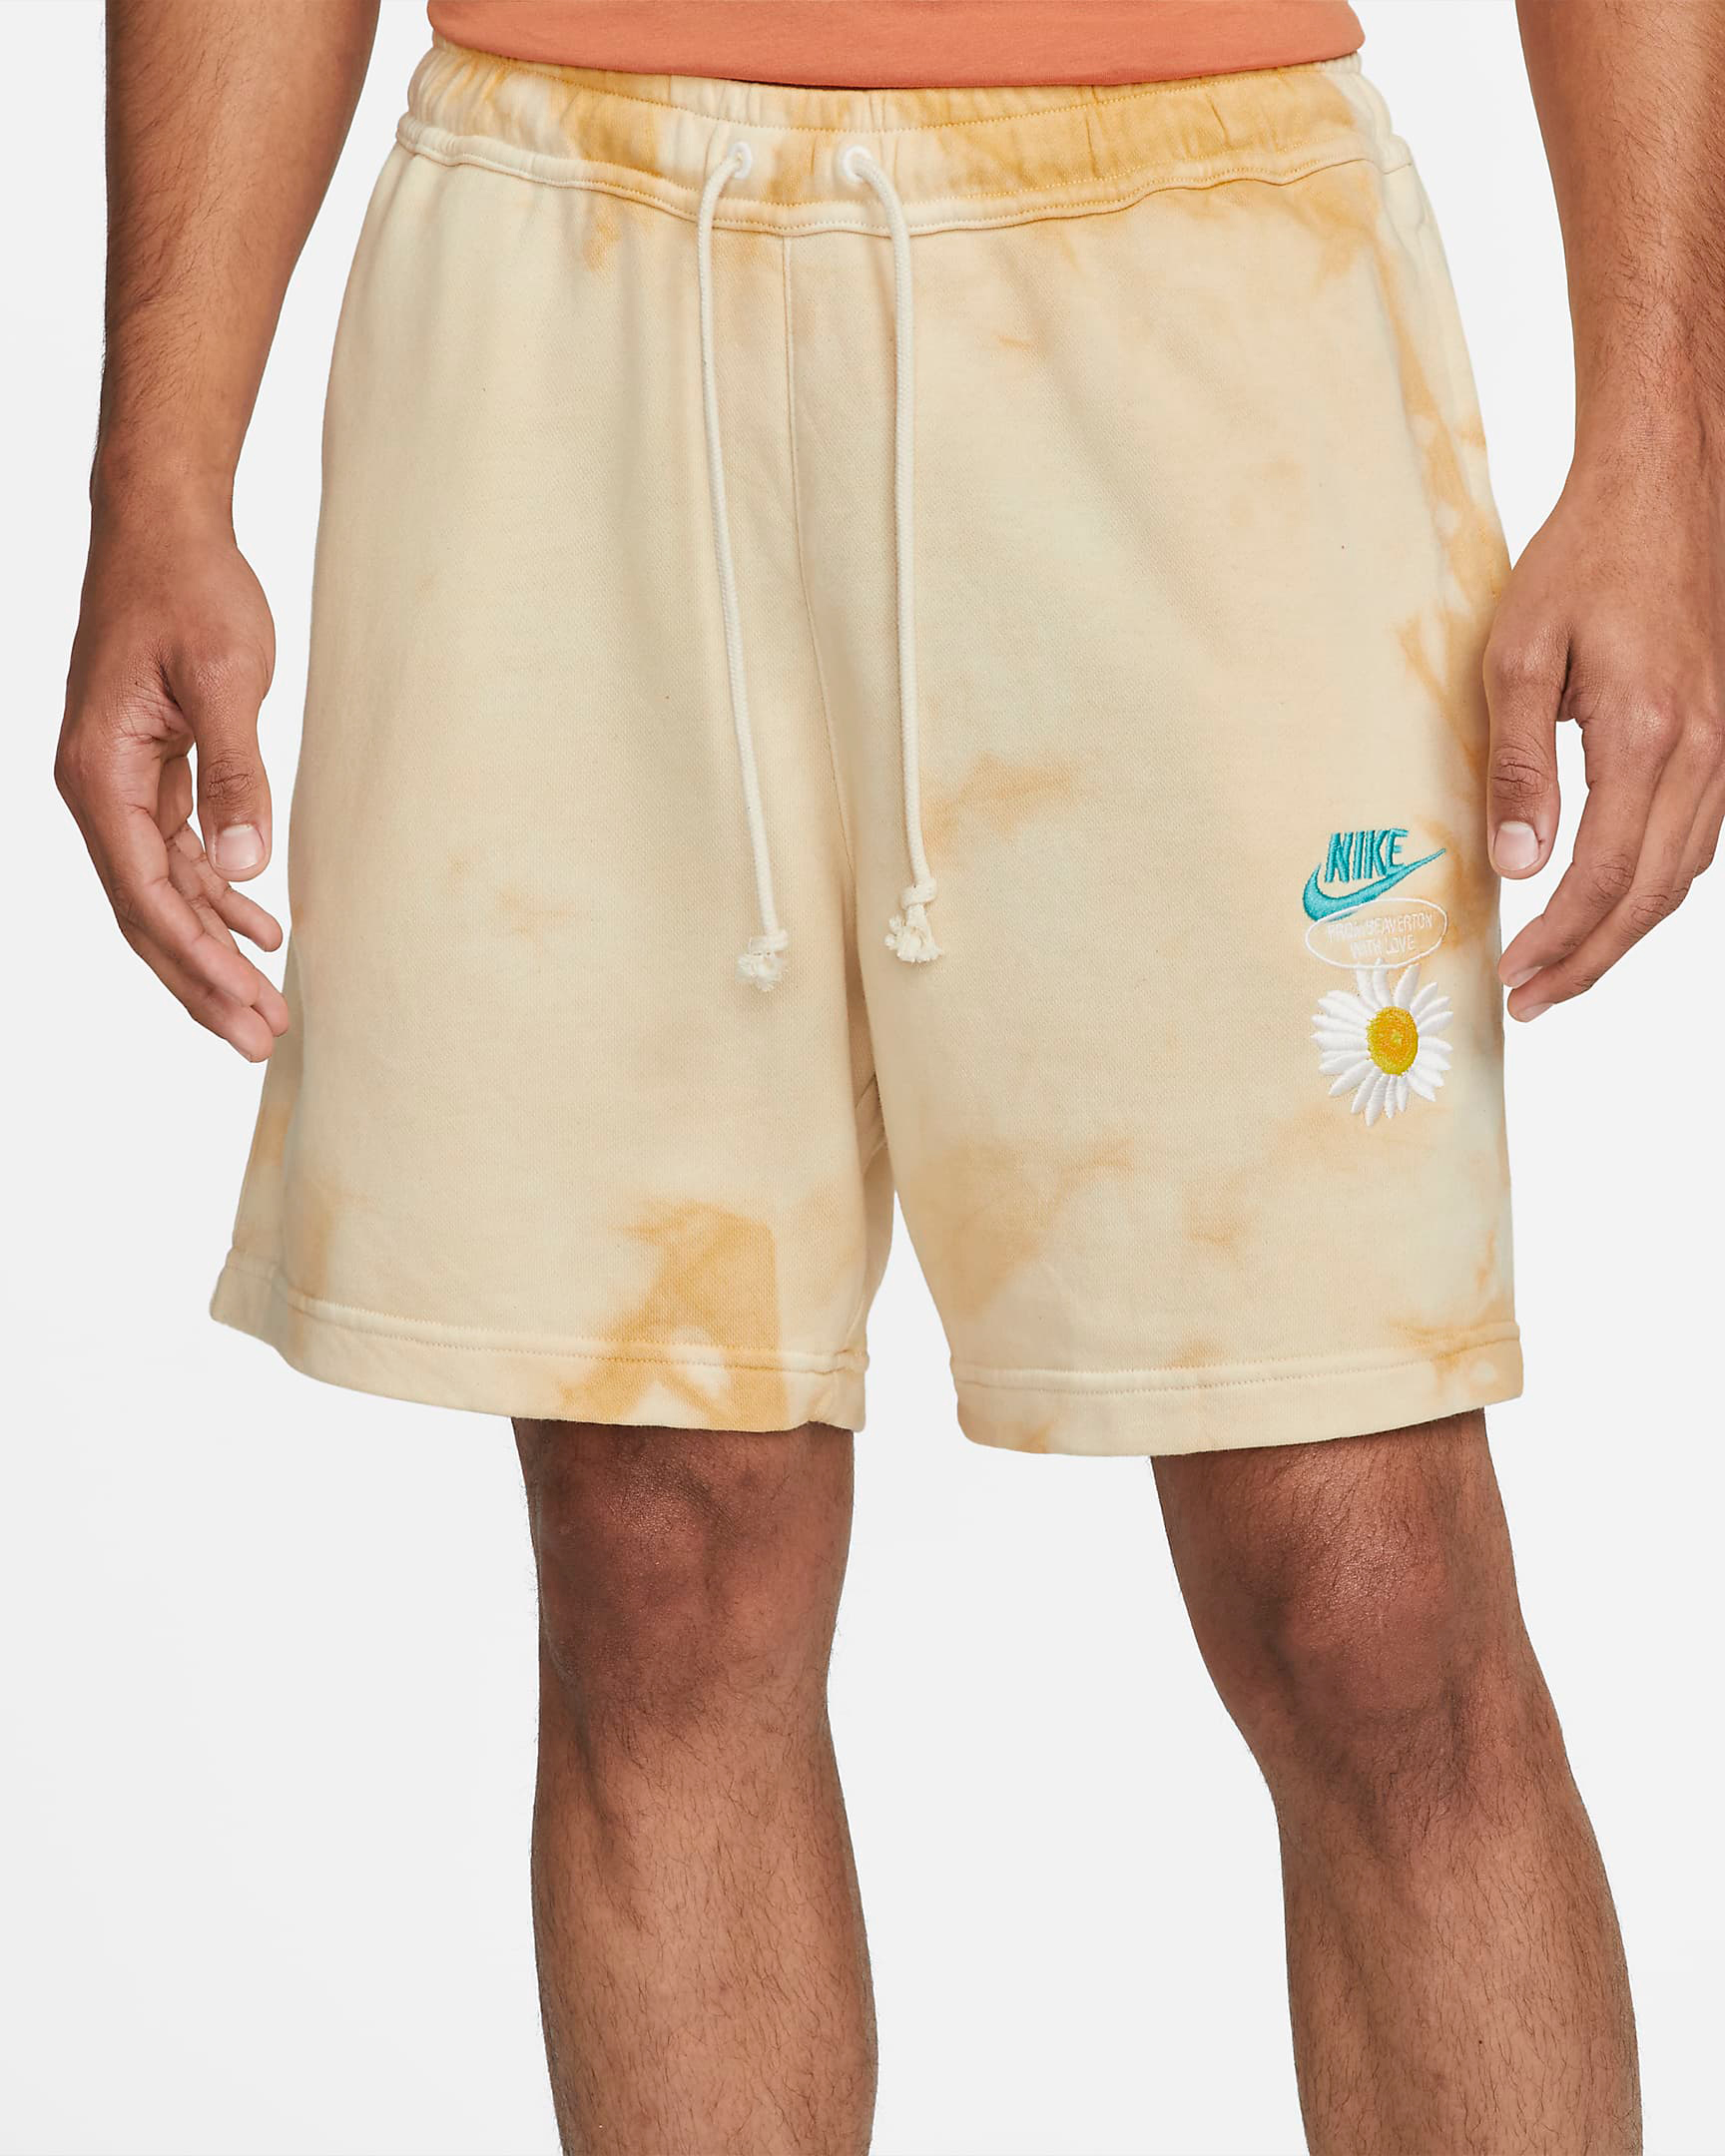 nike-sanded-gold-shorts